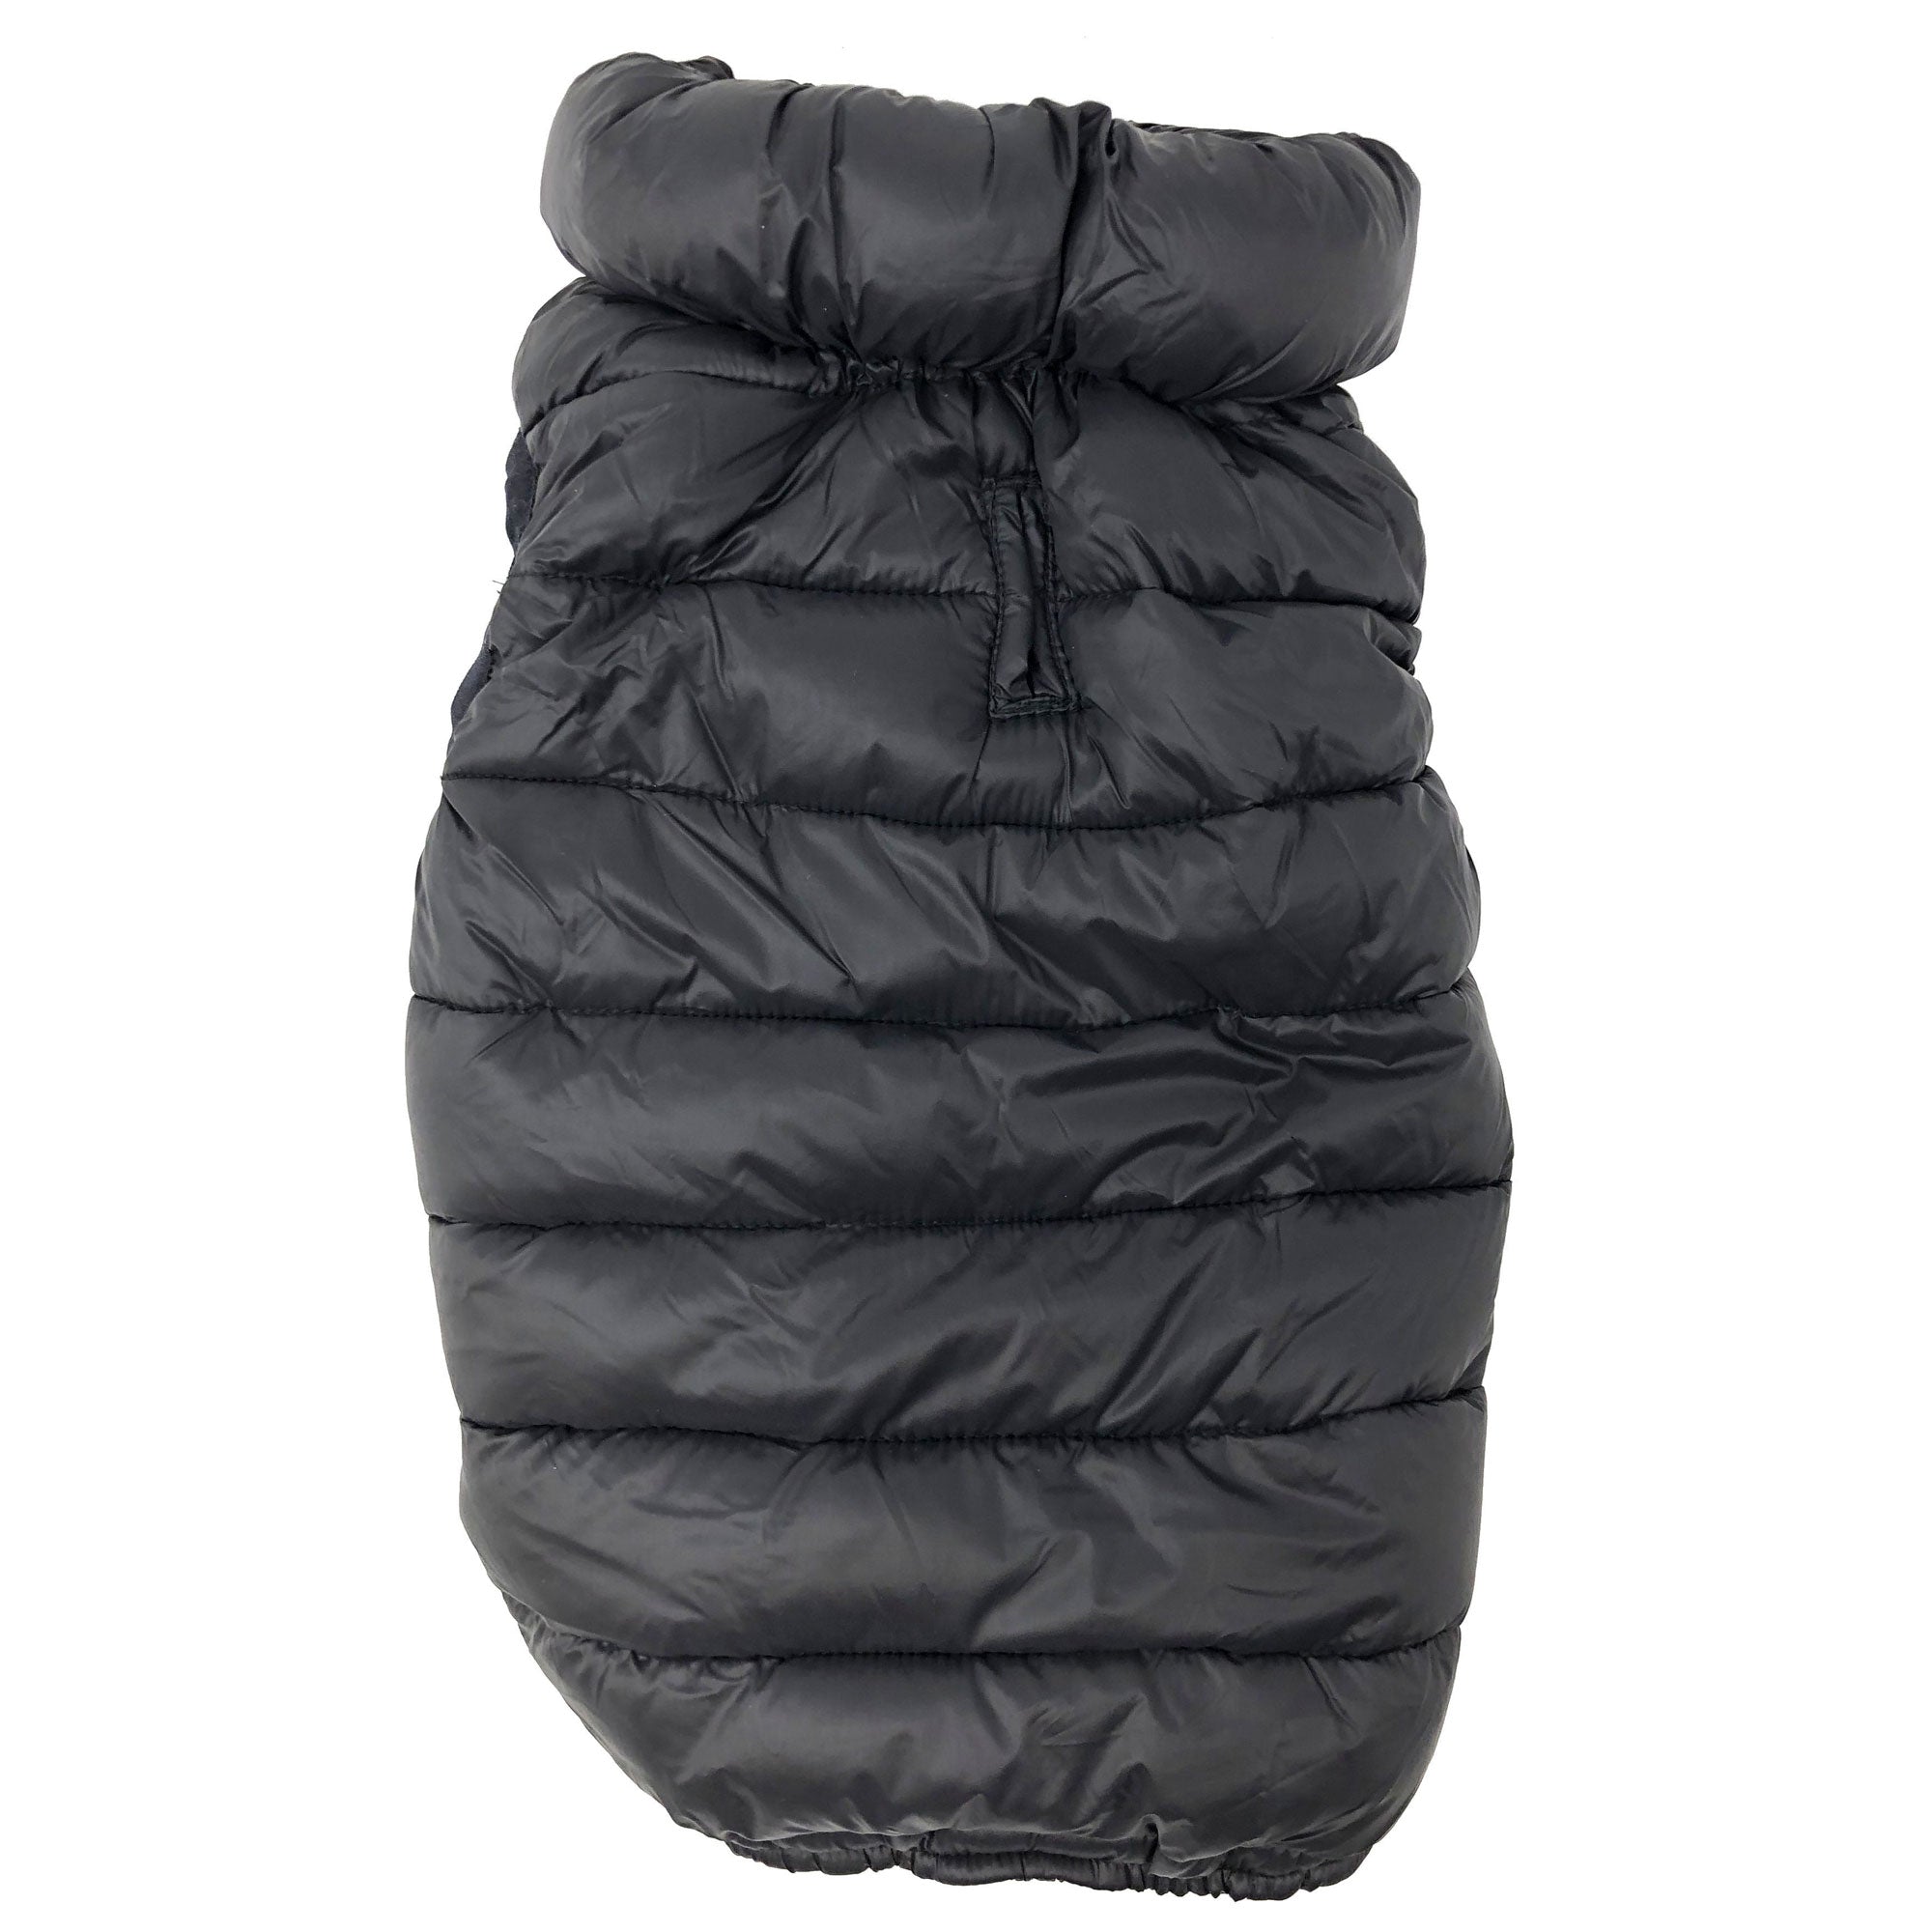 Pet Life® Black Pursuit Thermal Dog Jacket - X-Large